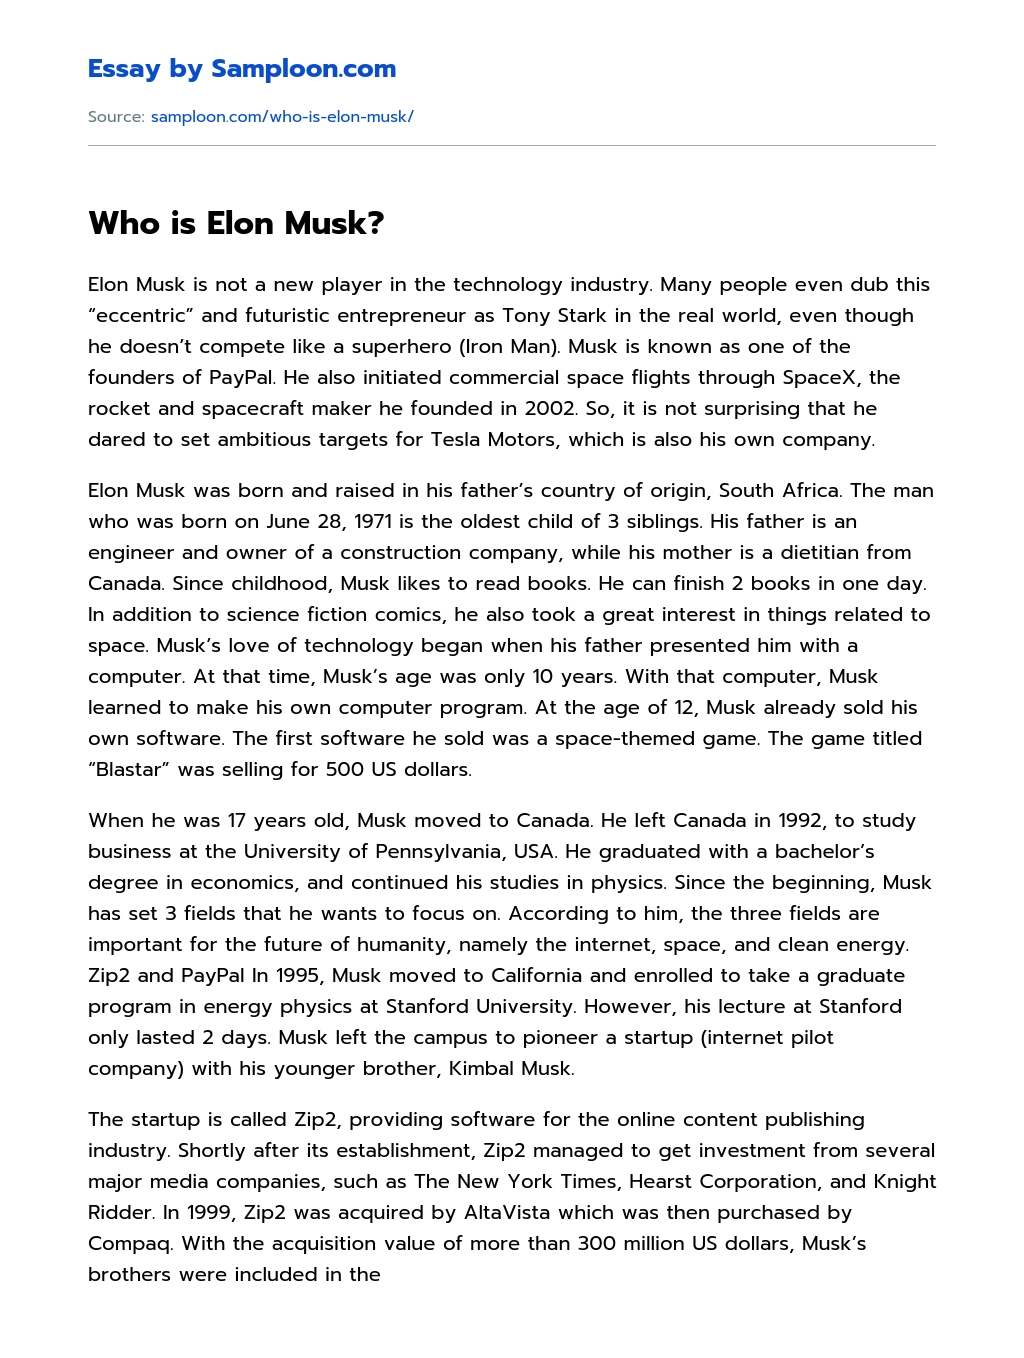 Who is Elon Musk? essay